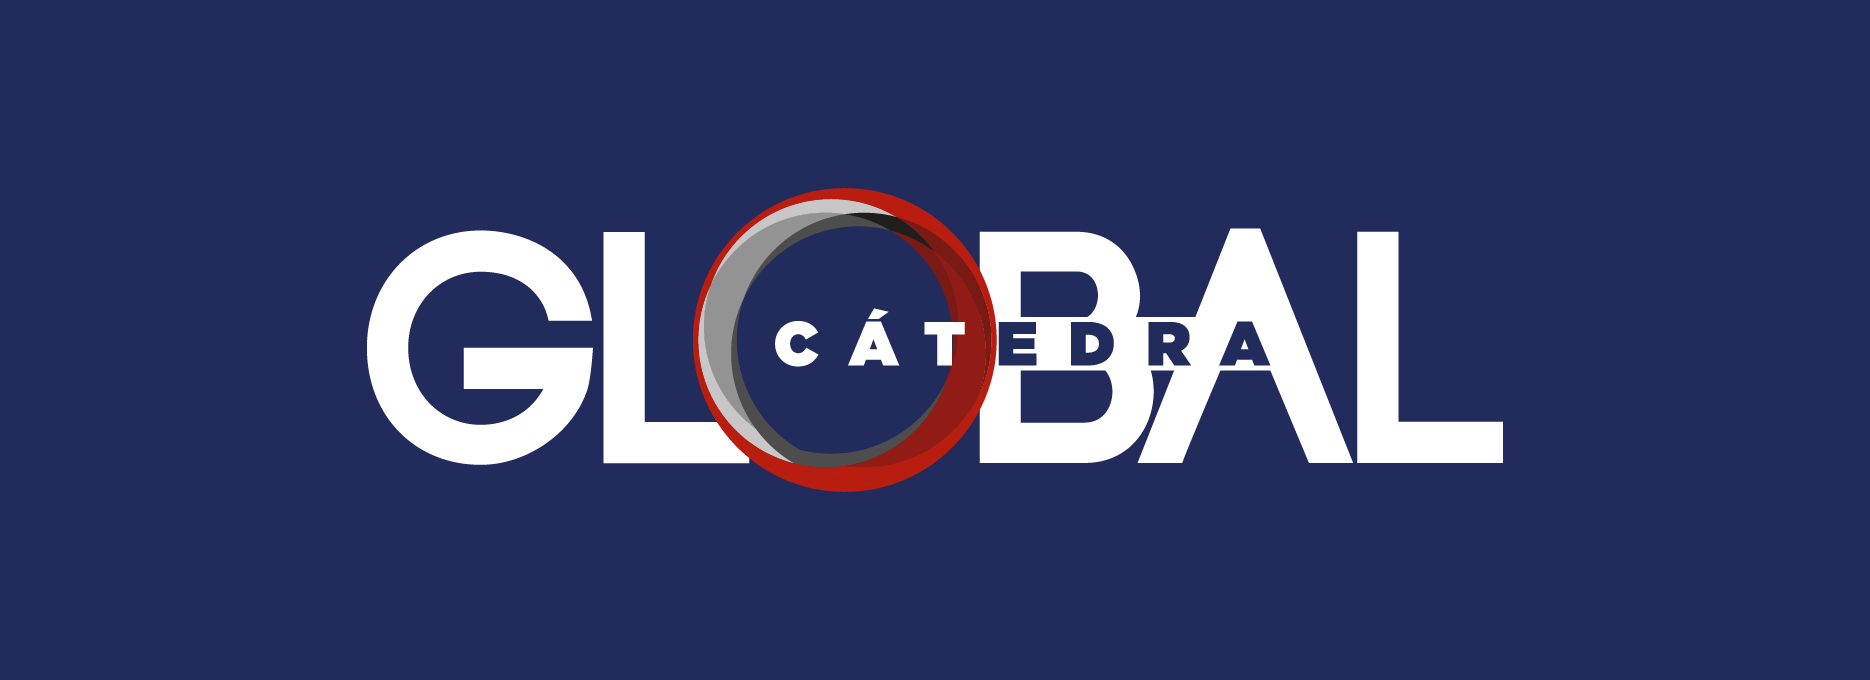 diseno-logo-catedra-global